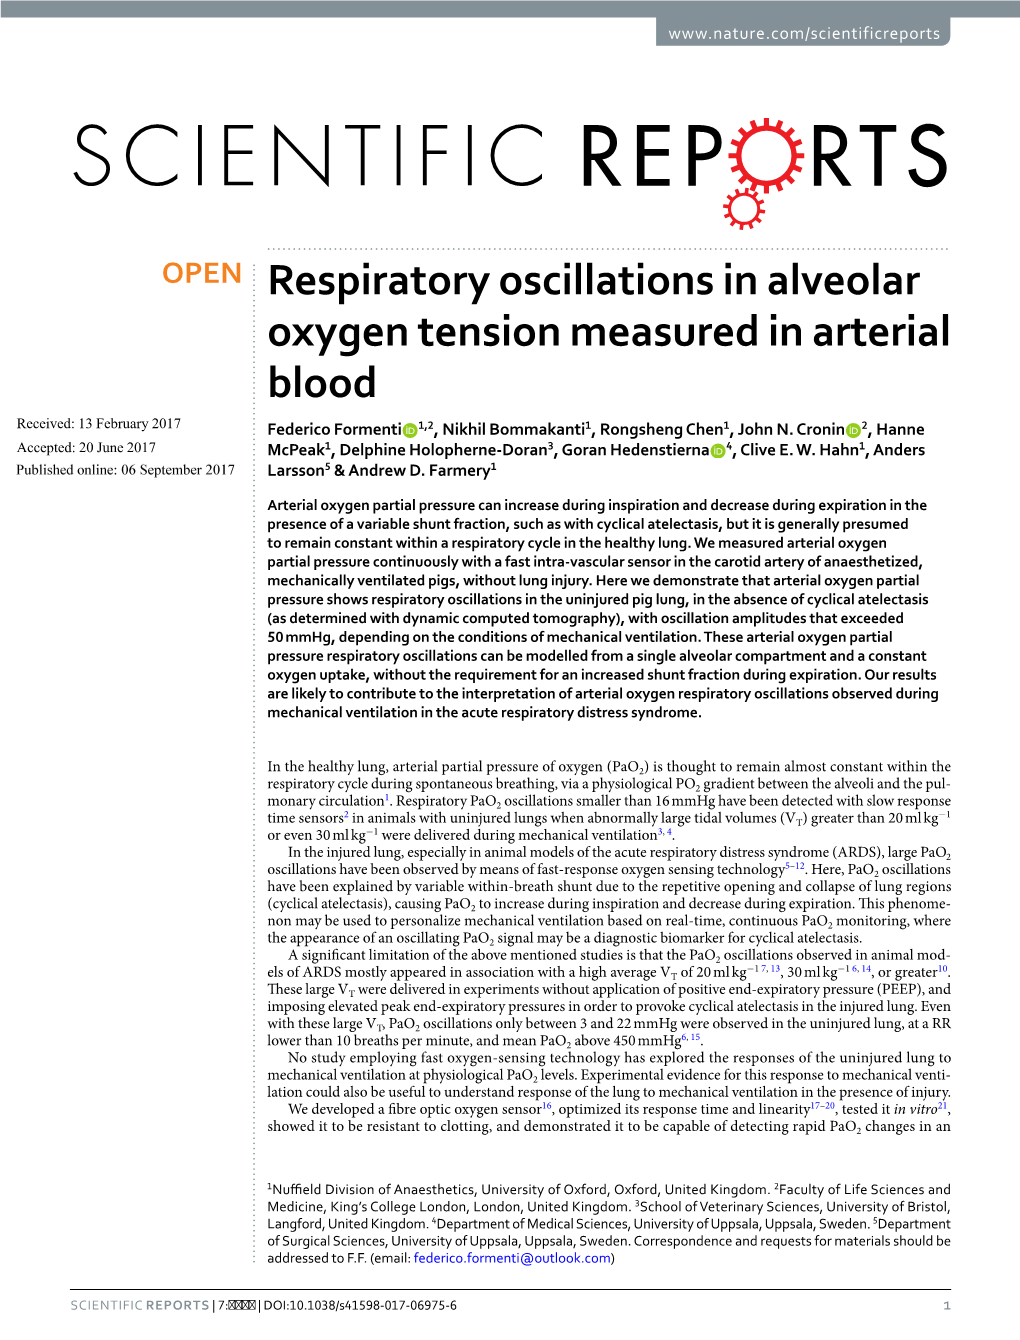 Respiratory Oscillations in Alveolar Oxygen Tension Measured in Arterial